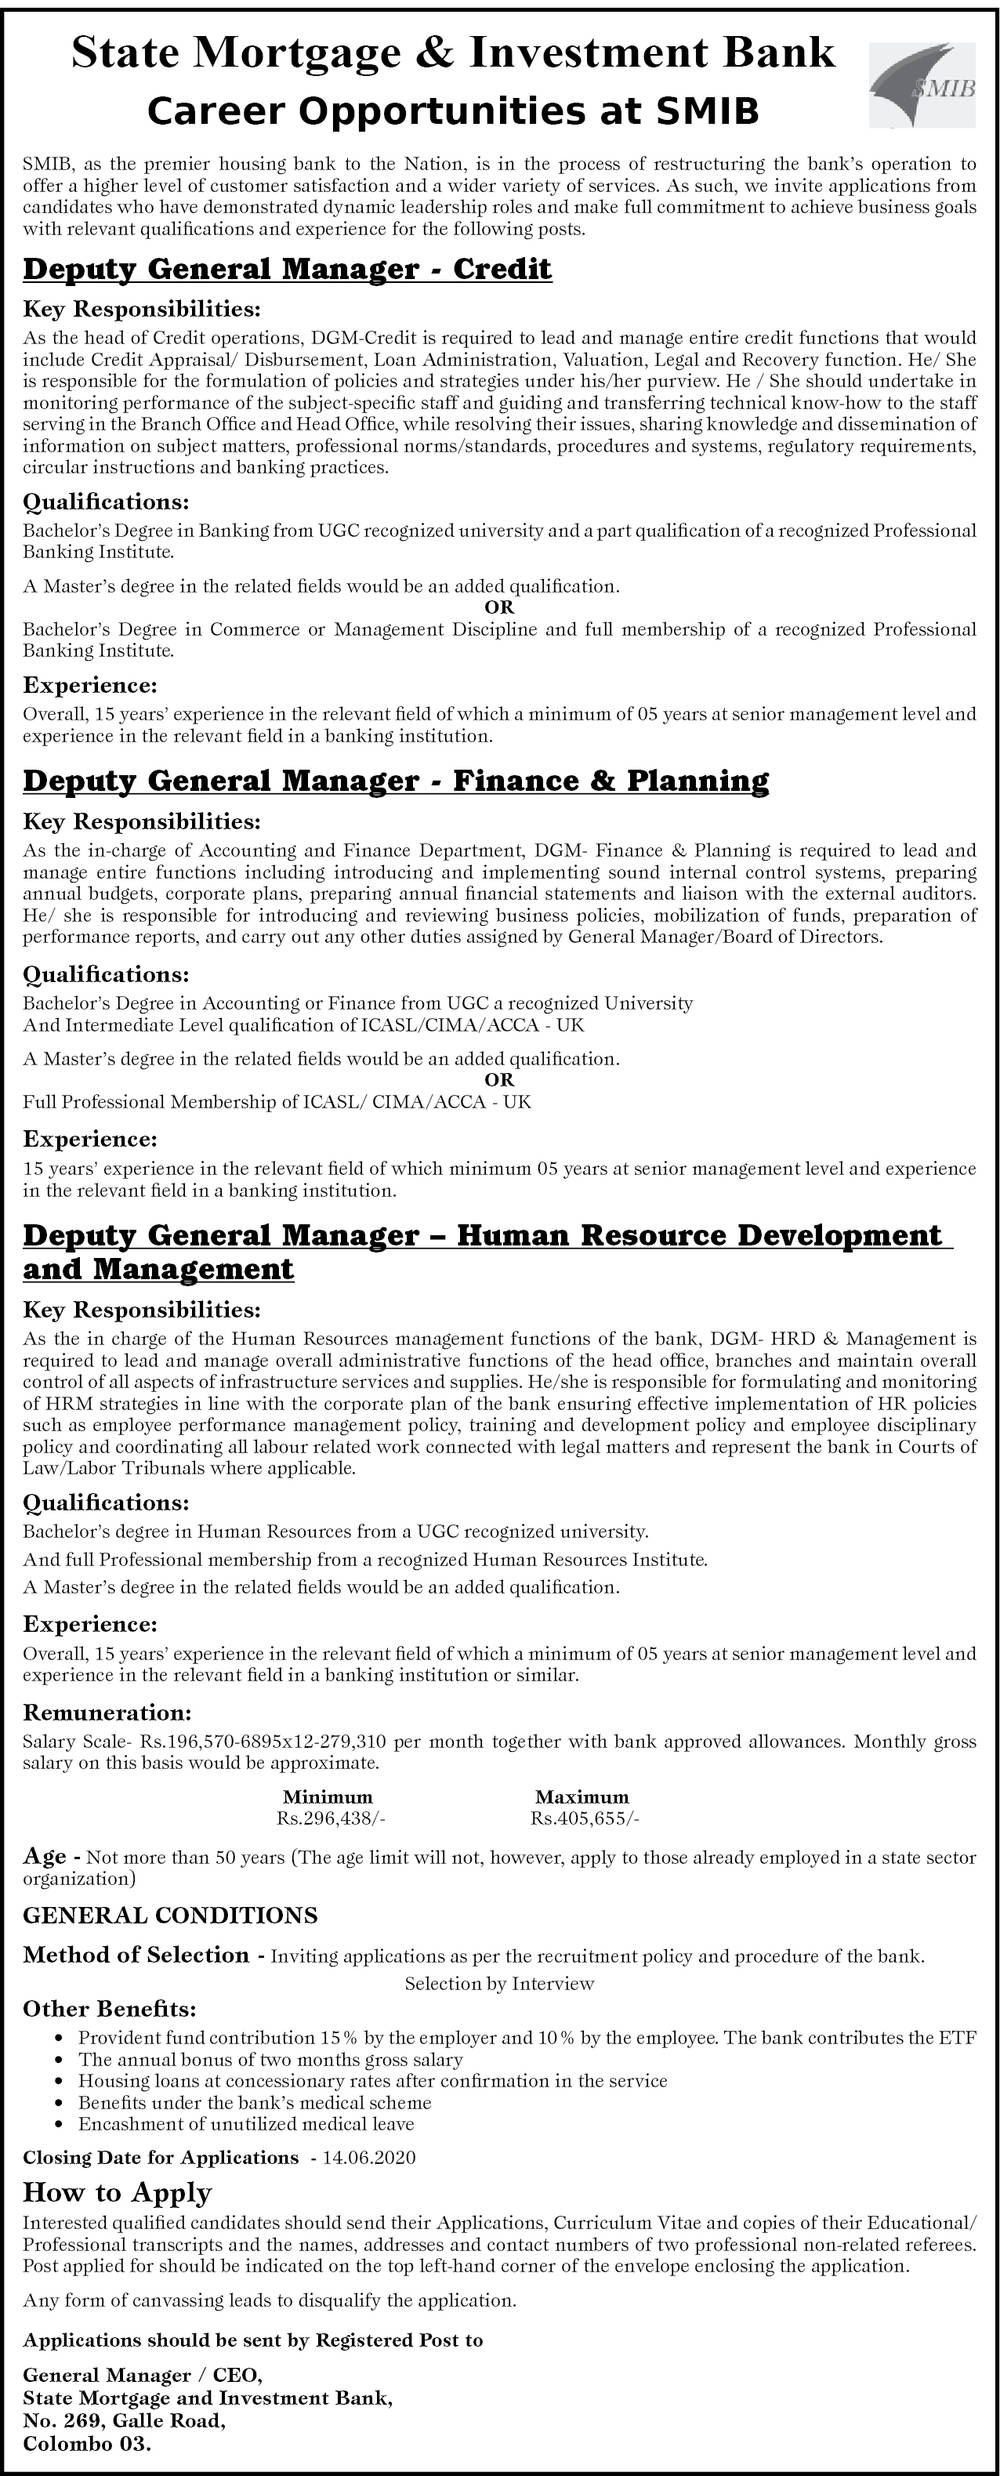 Deputy General Manager (Credit, Finance & Planning, HR Development & Management) - State Mortgage & Investment Bank